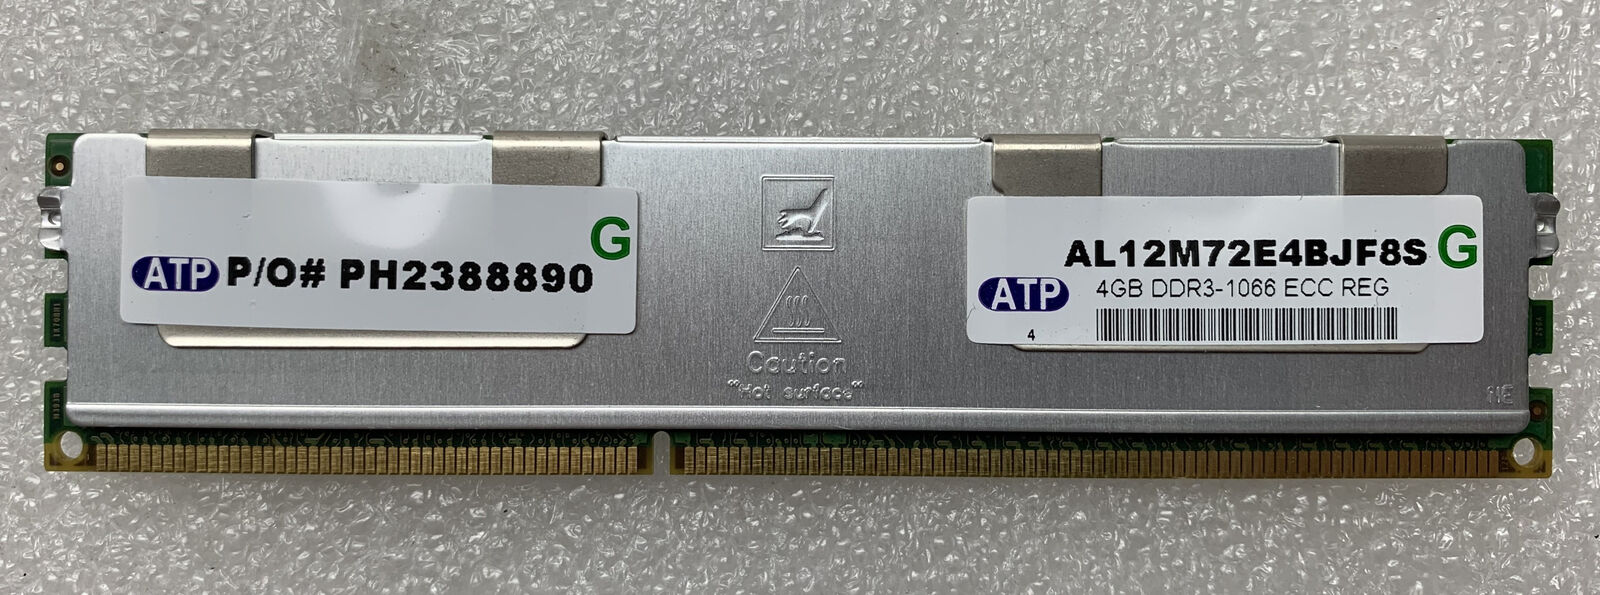 Lot of 6 ATP RAM RDIMM 4GB 1066MHz PC3-8500R Registered ECC CL7 AL12M72E4BJF8S